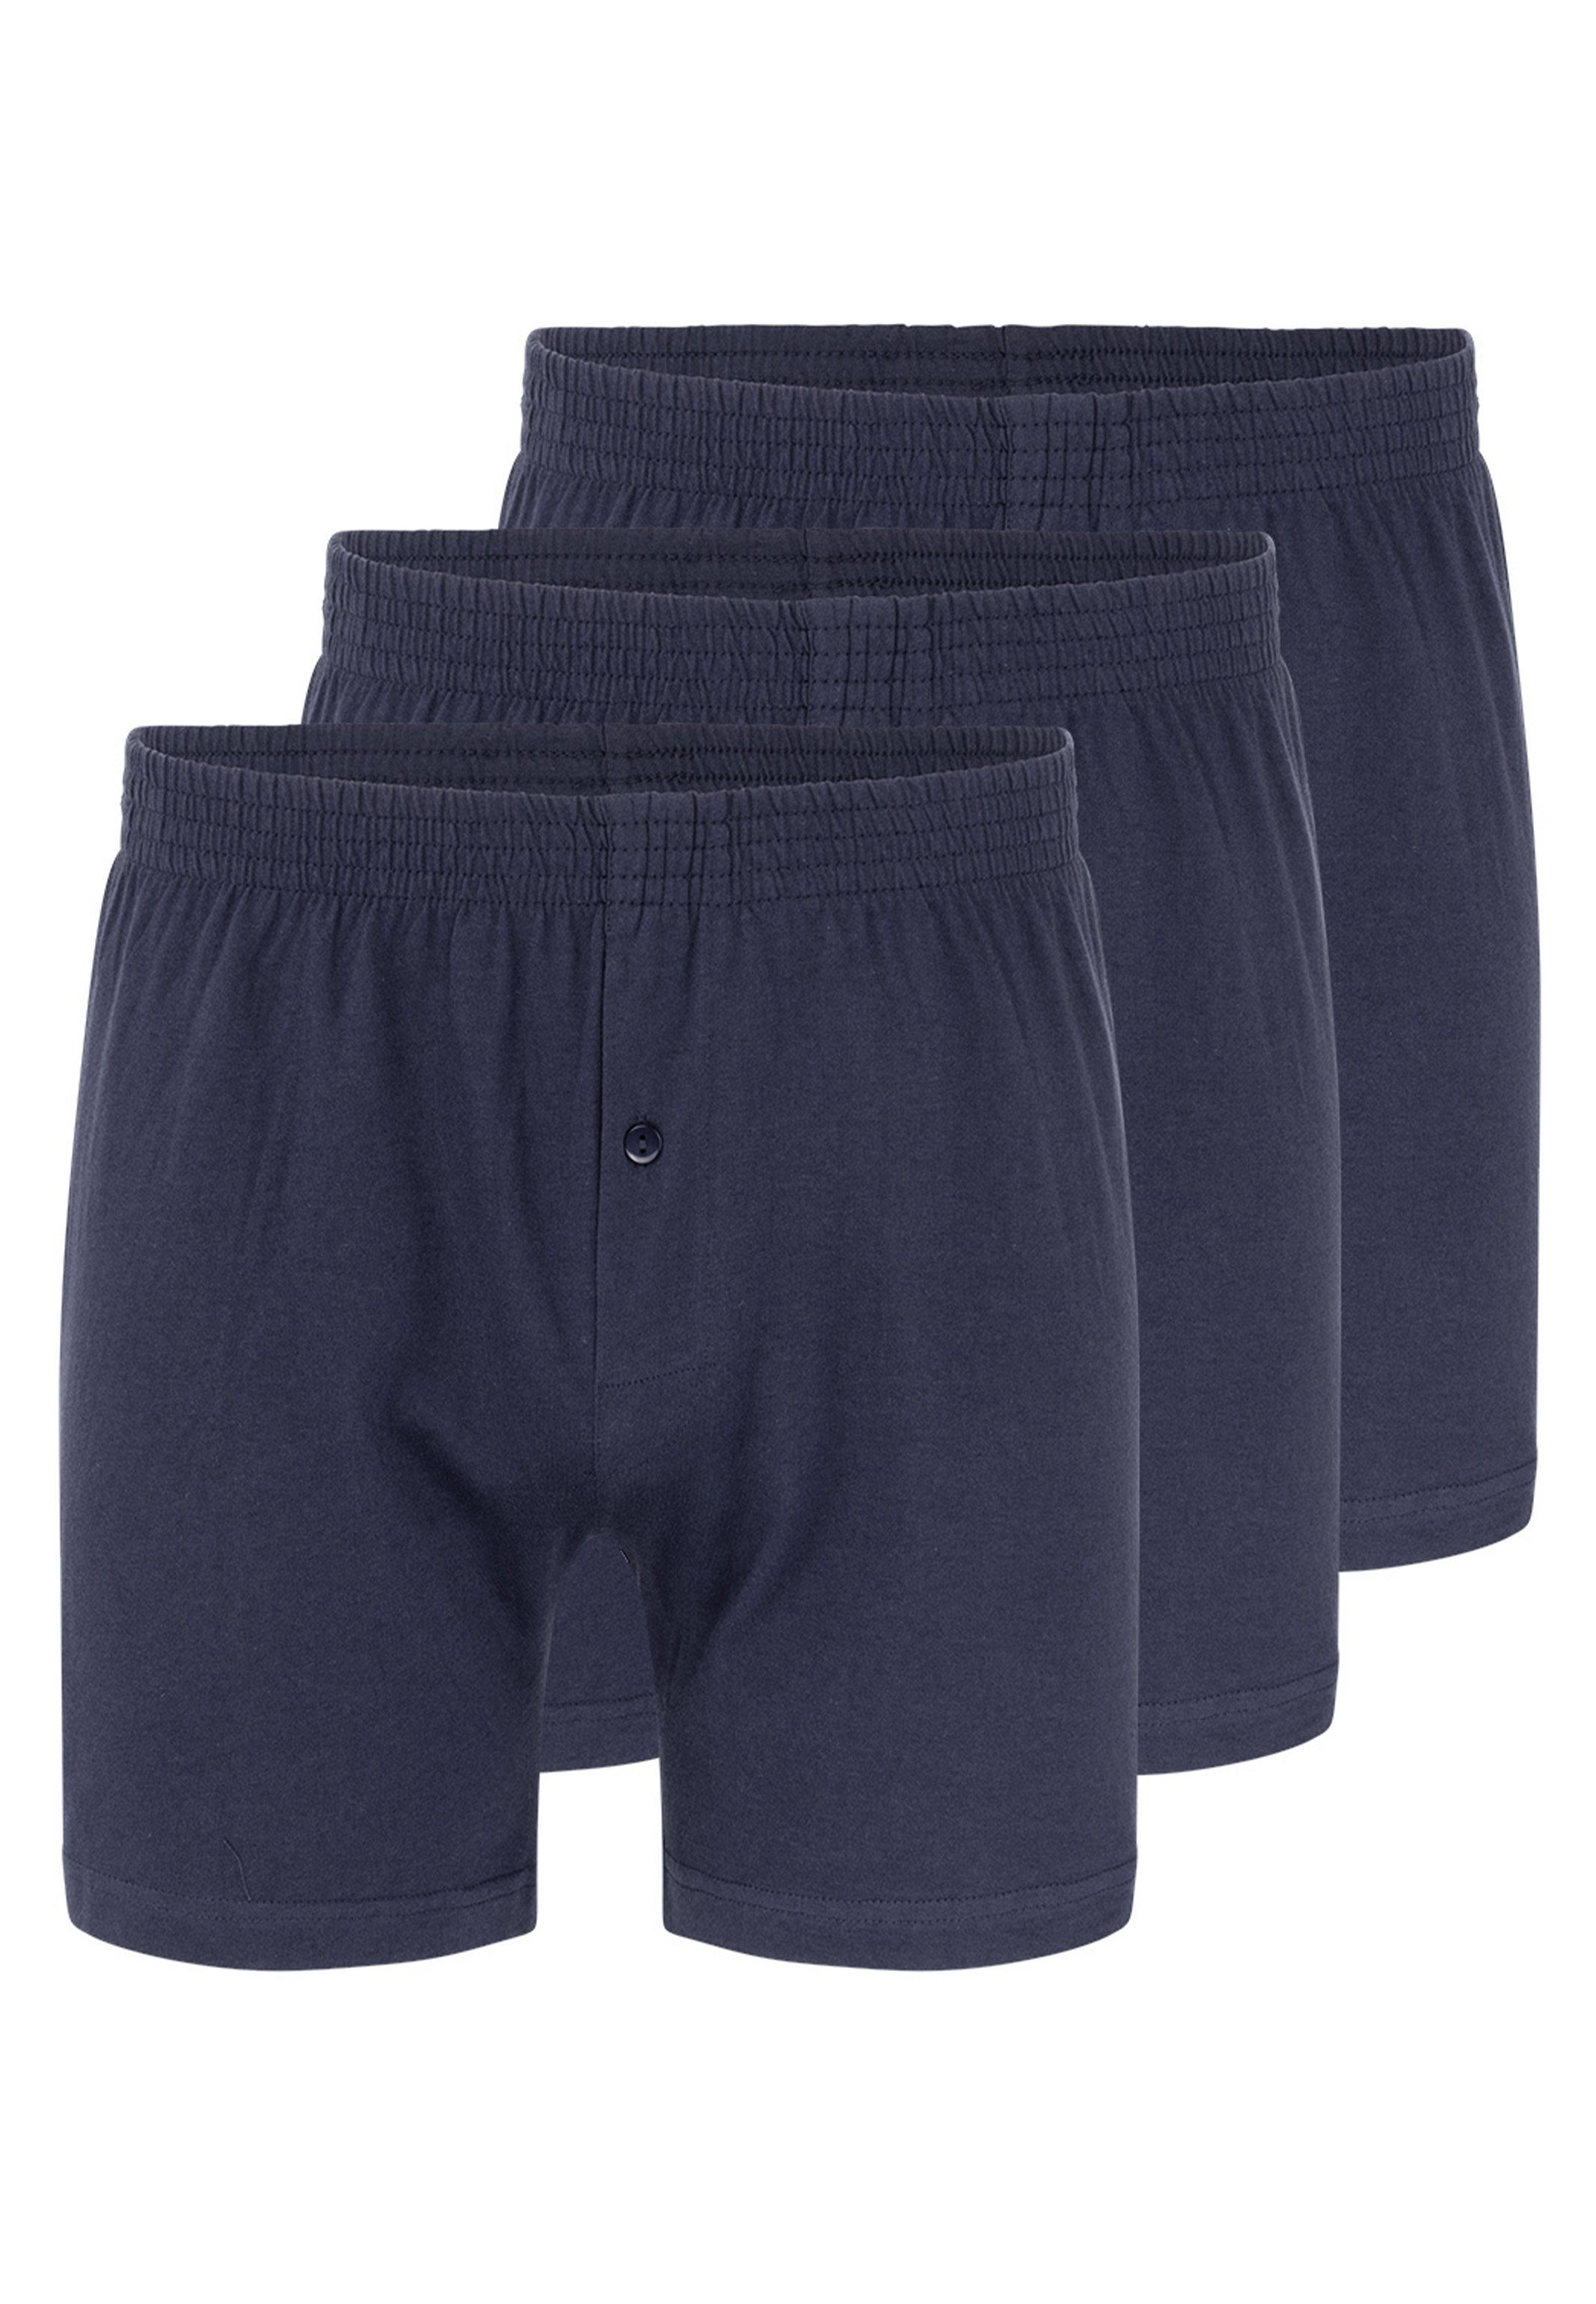 Almonu Boxershorts 3er Pack Organic Cotton (Spar-Set, 3-St) Boxershorts - Baumwolle - Mit Eingriff - Atmungsaktiv Navy | Boxer weit